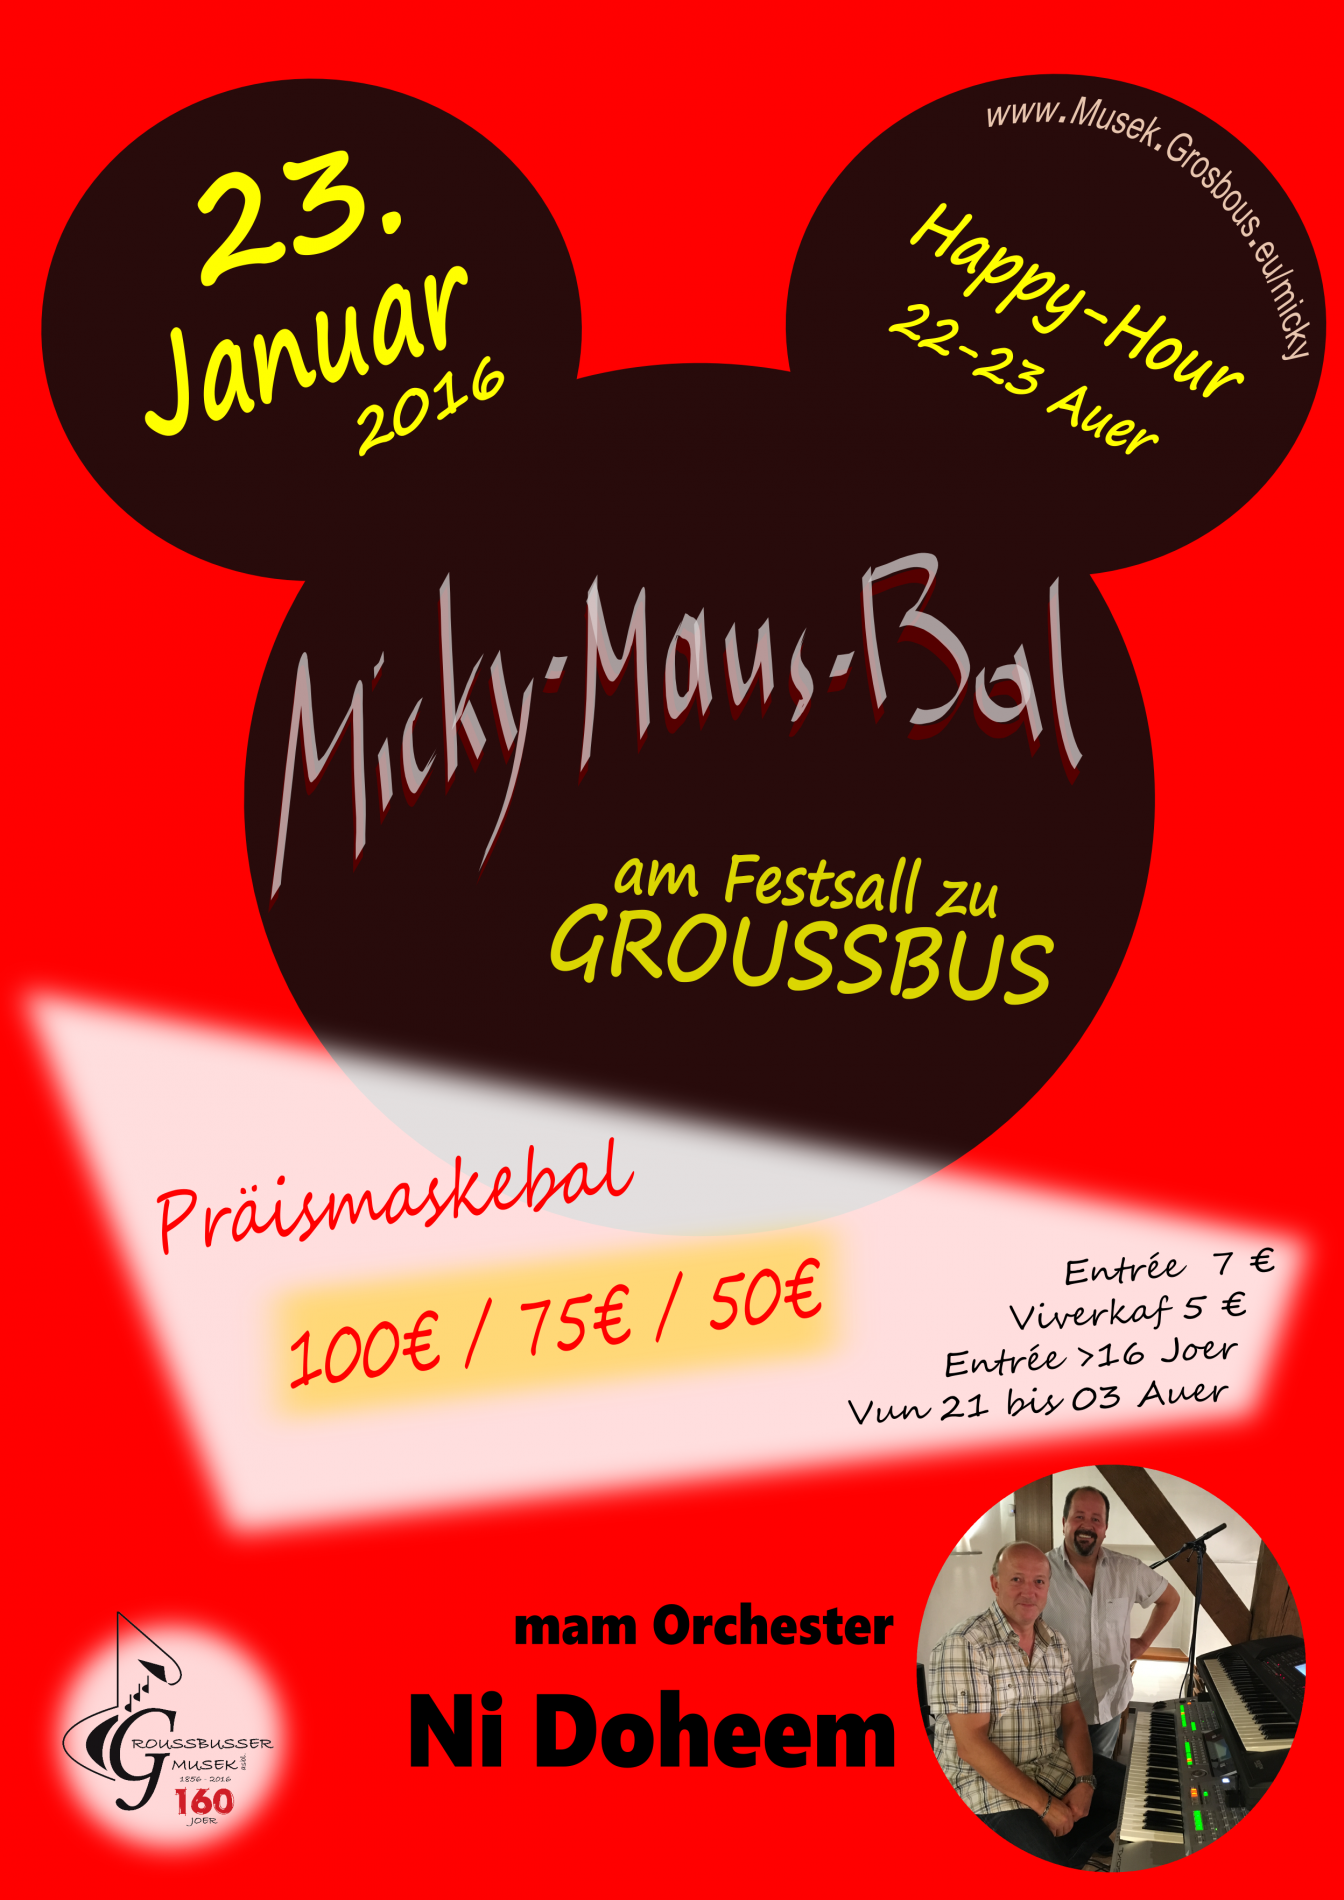 Affiche Micky-Maus-Bal 2016